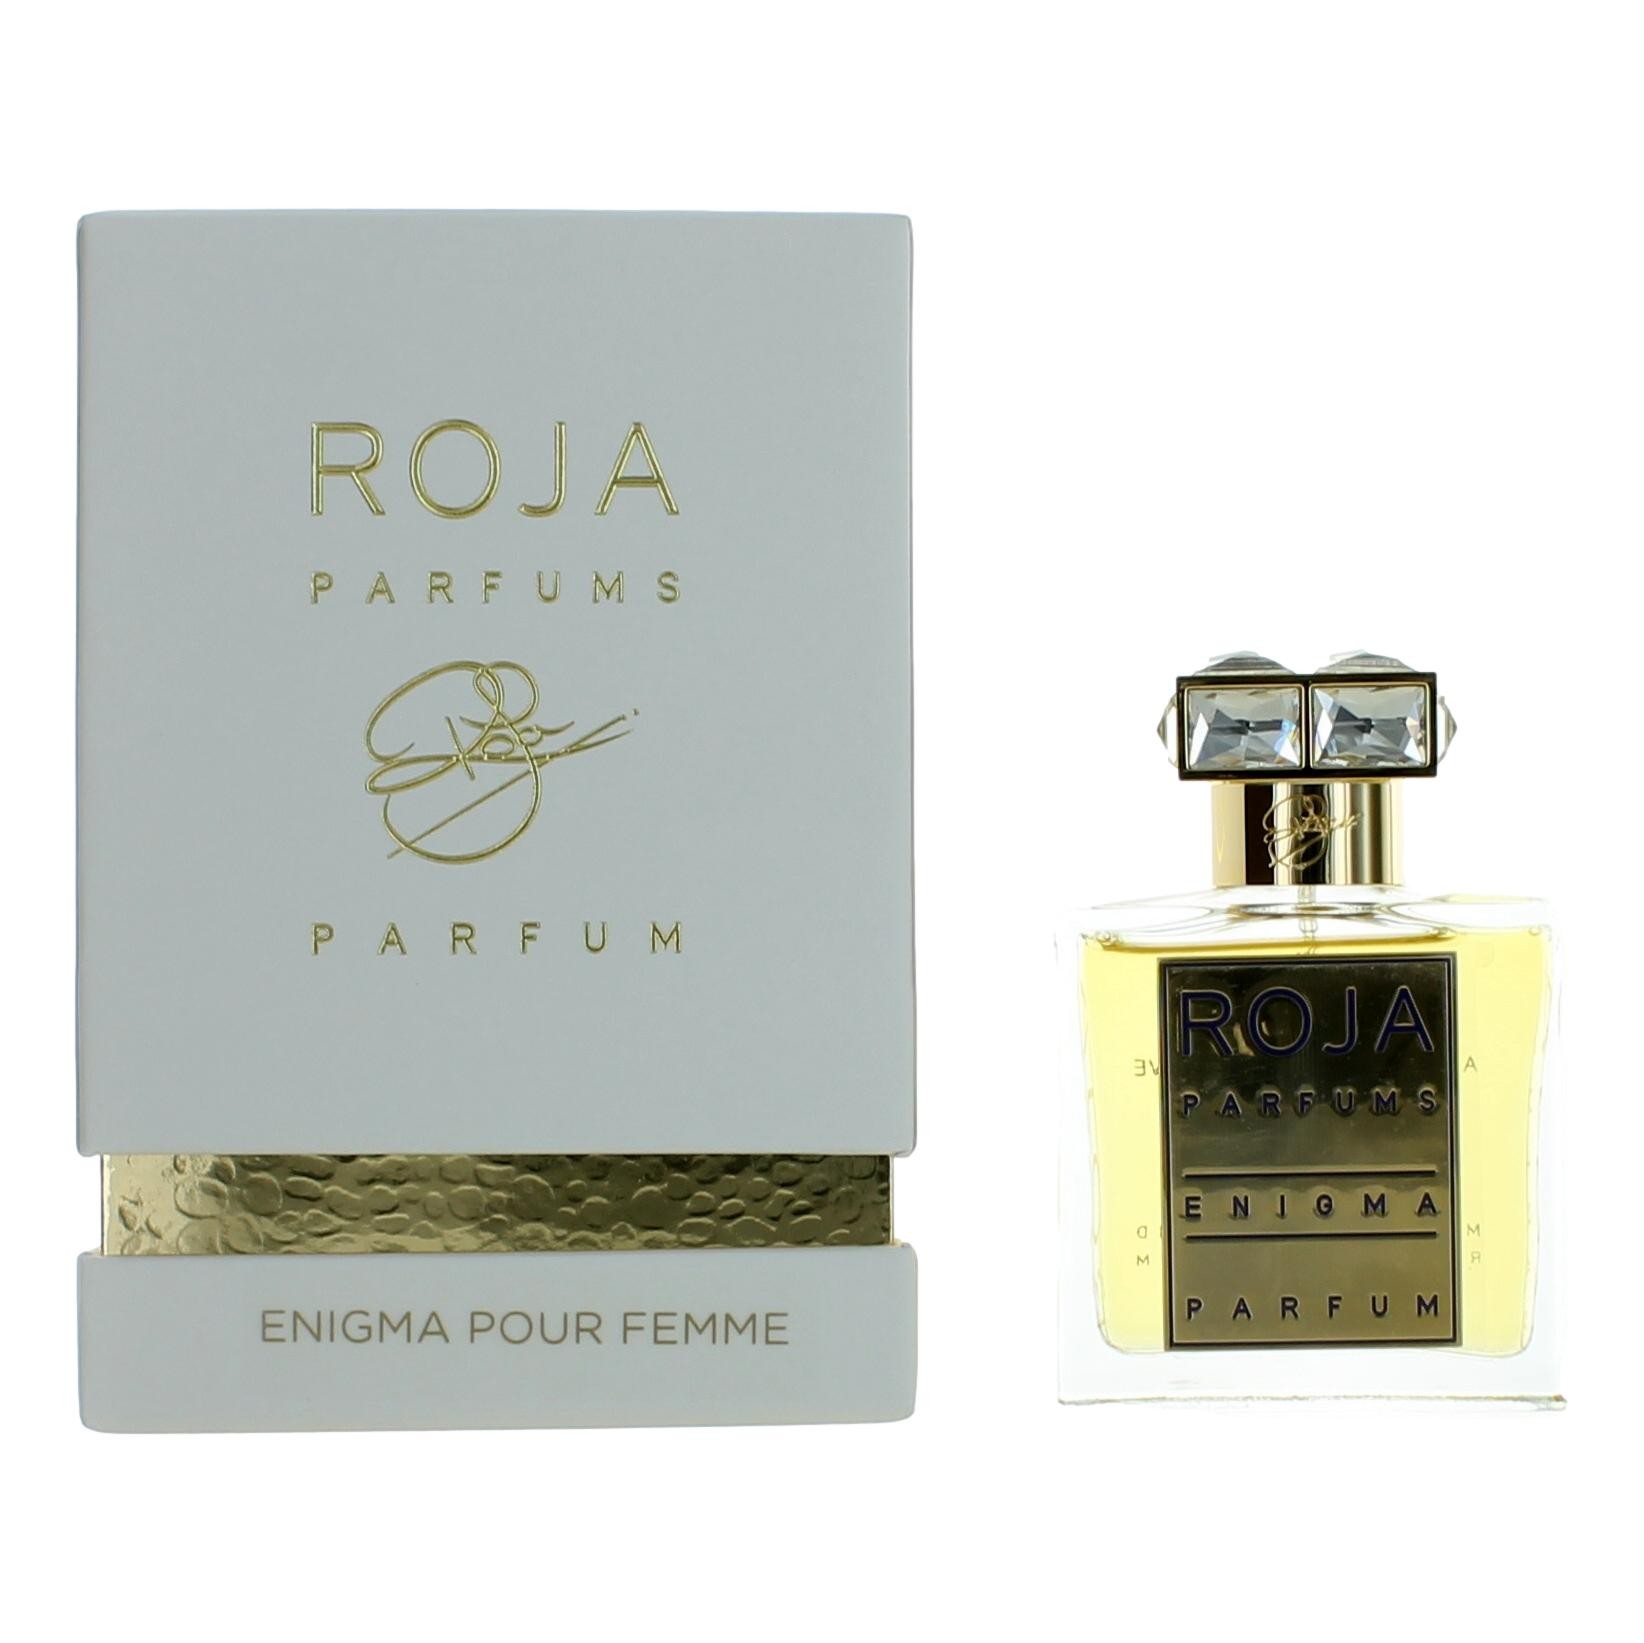 Enigma Pour Femme by Roja Parfums 1.7 oz Parfum Spray for Women